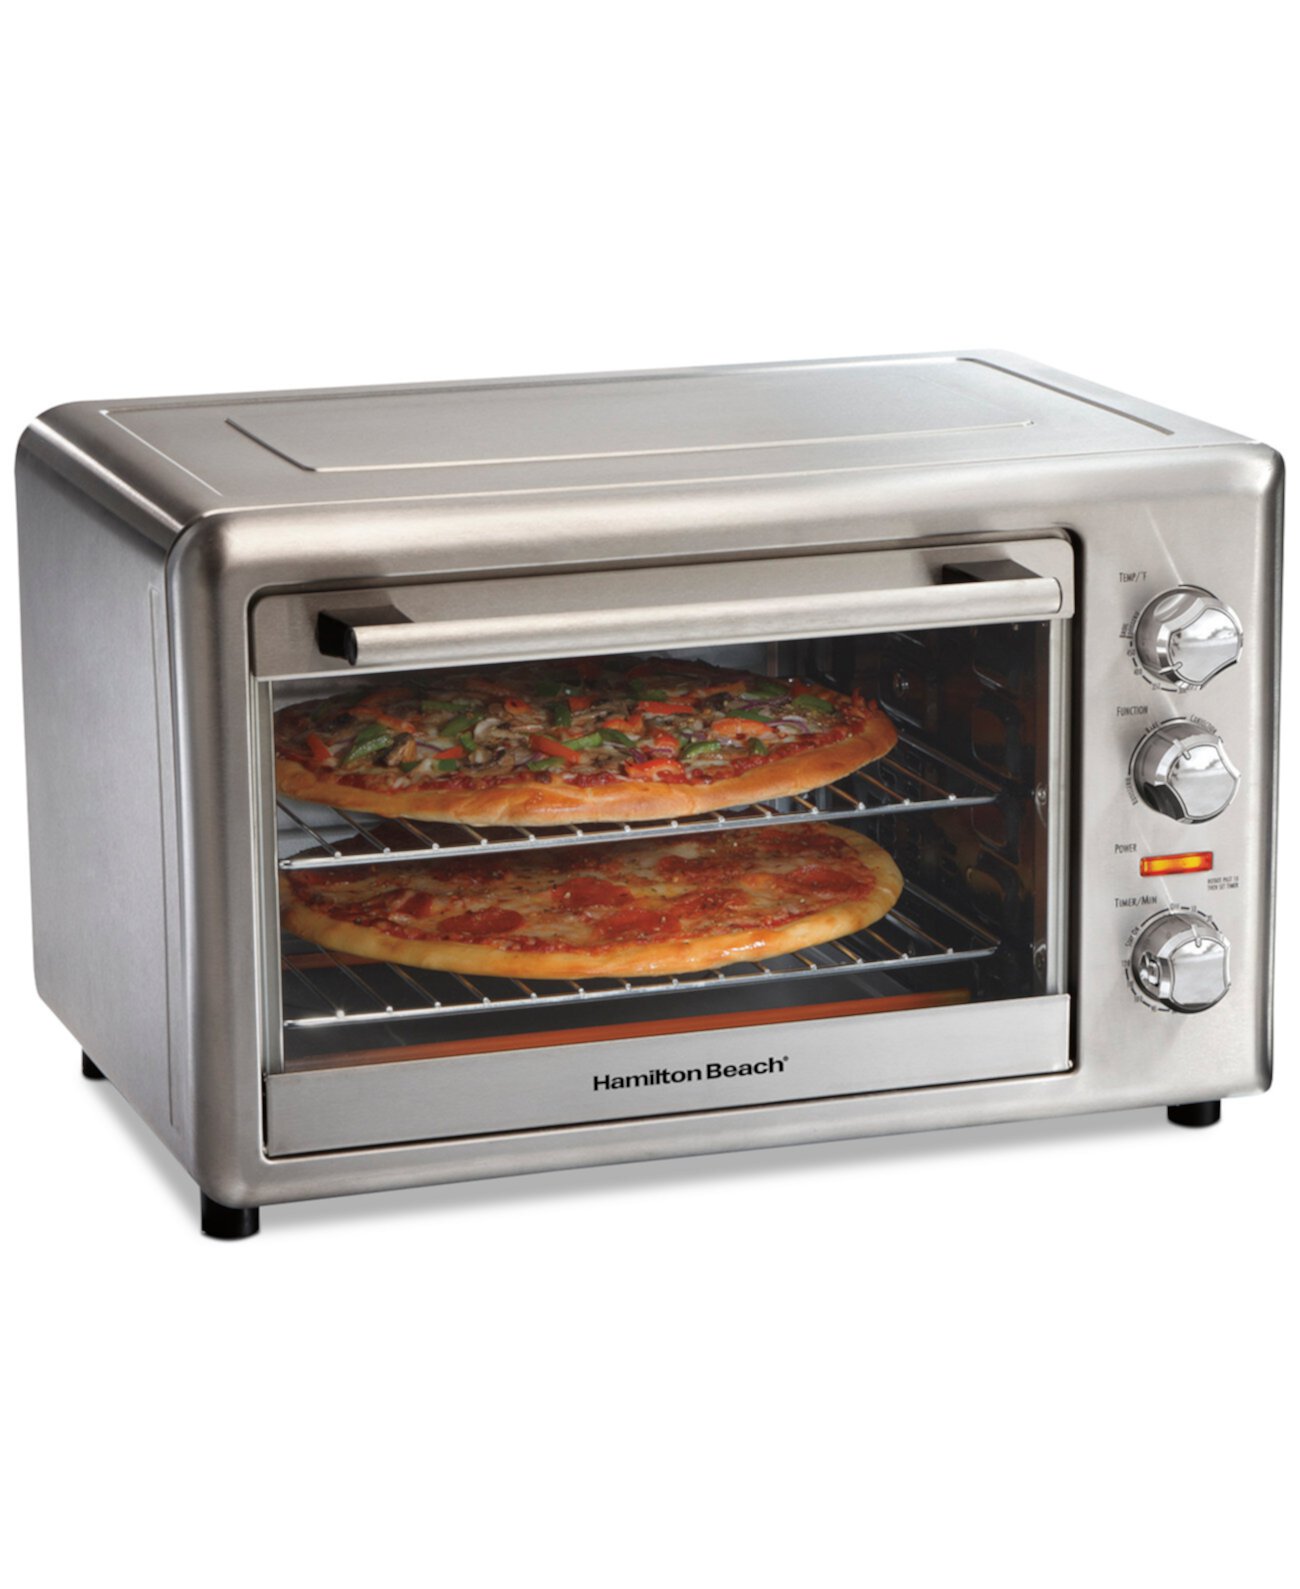 Hemilton Toaster Oven 20l 1000w Black hem-109 отзывы